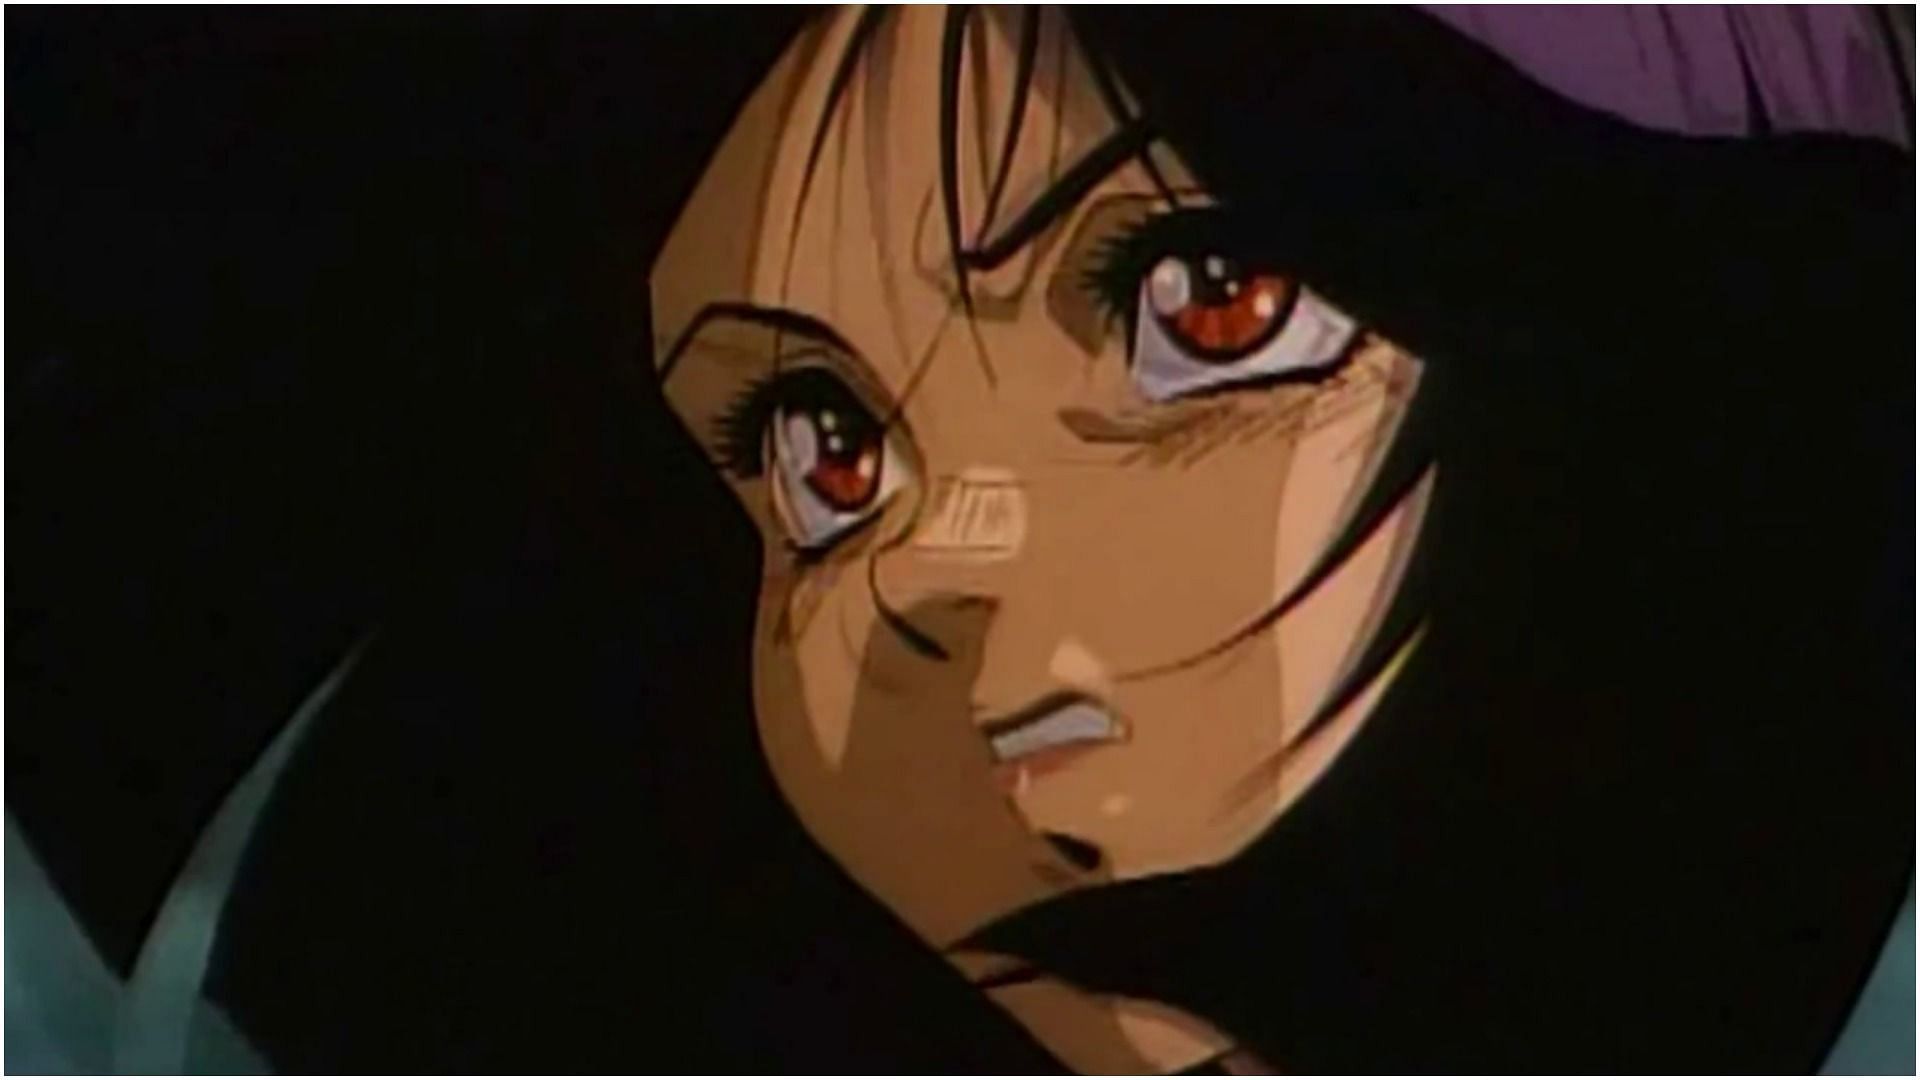 Alita as seen in the anime Battle Angel Alita (Image via Madhouse)